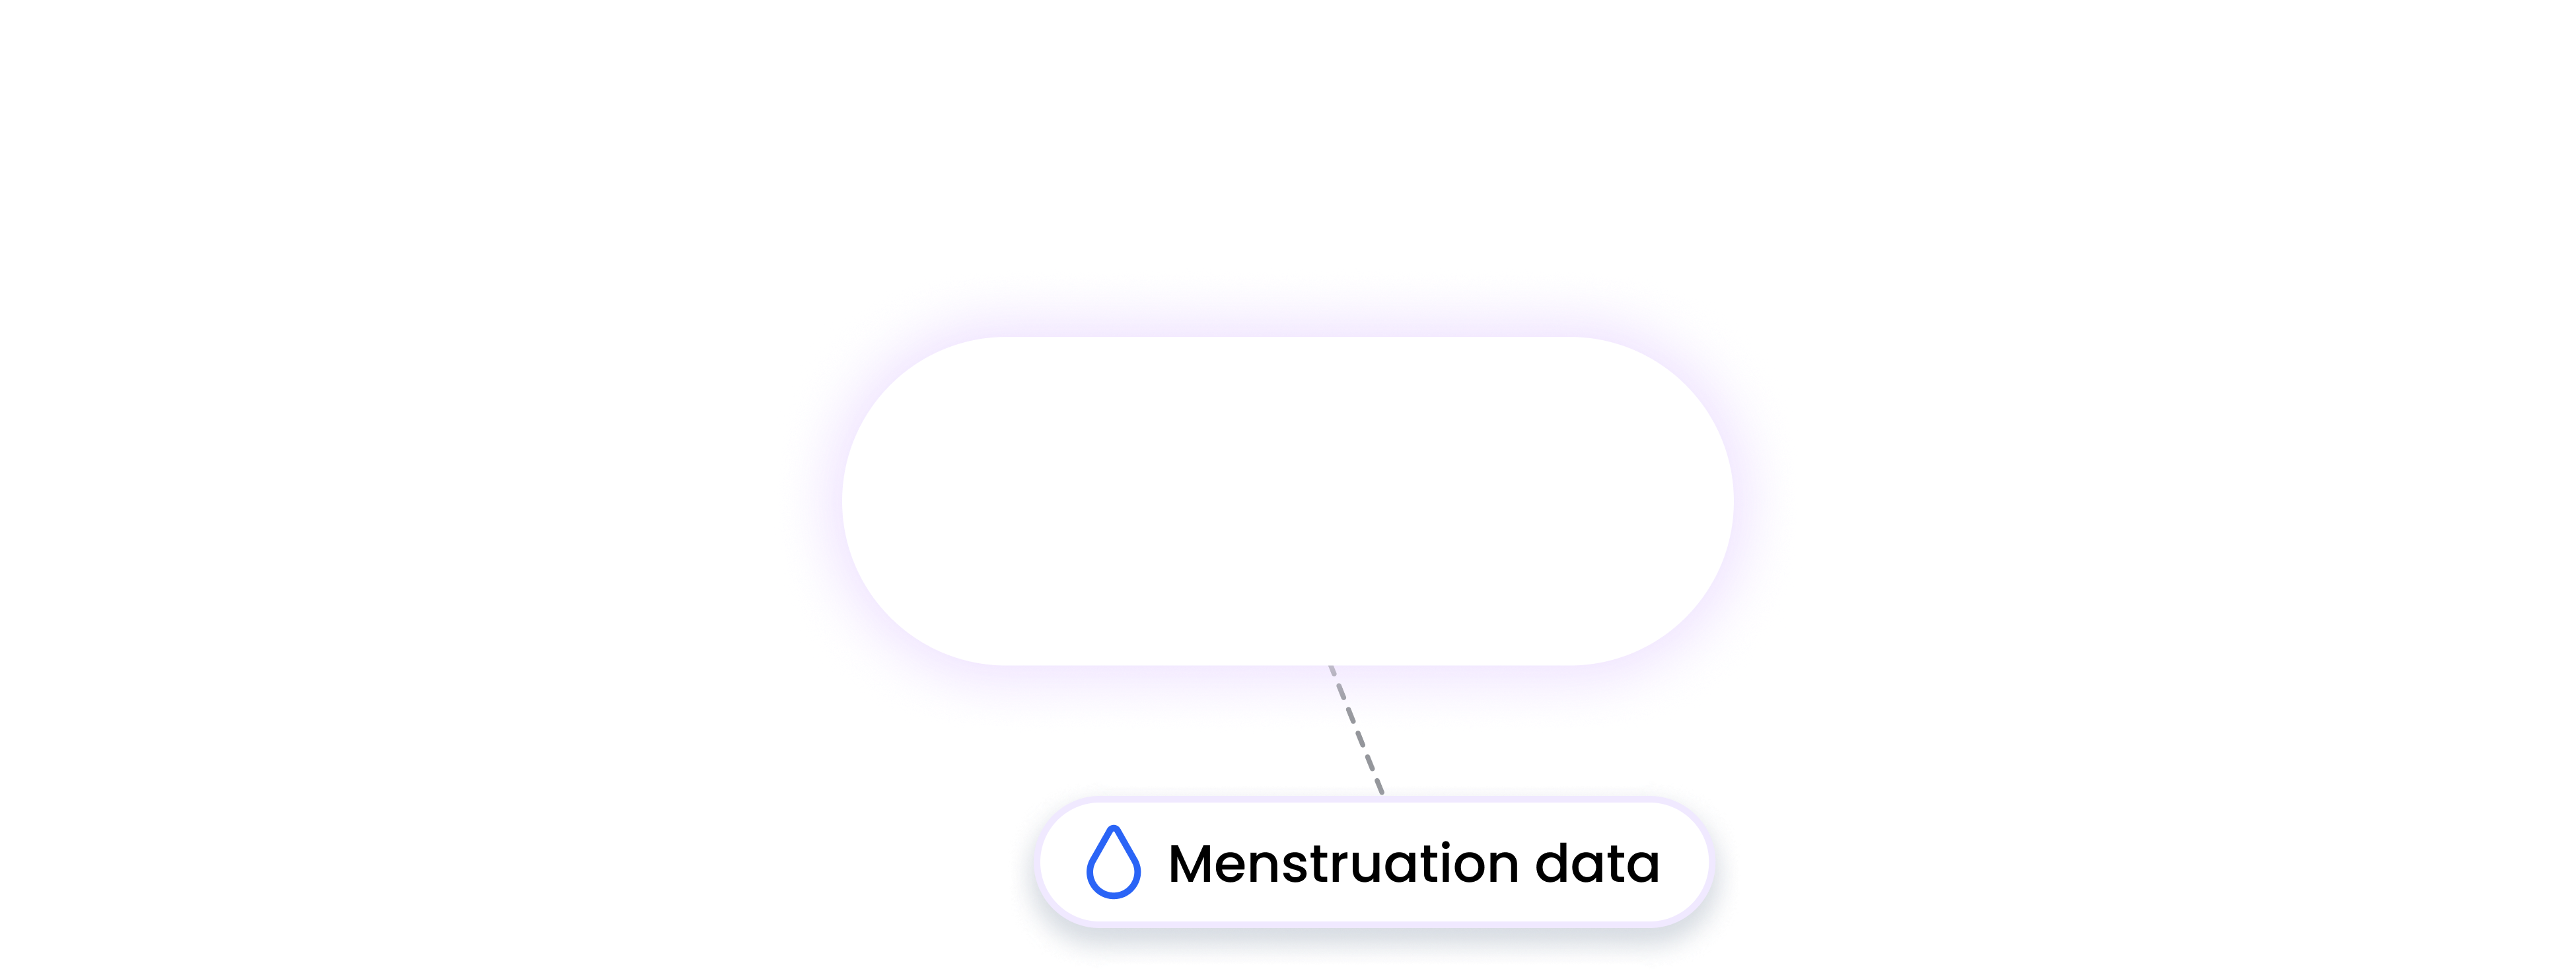 wger integration MENSTRUATION data